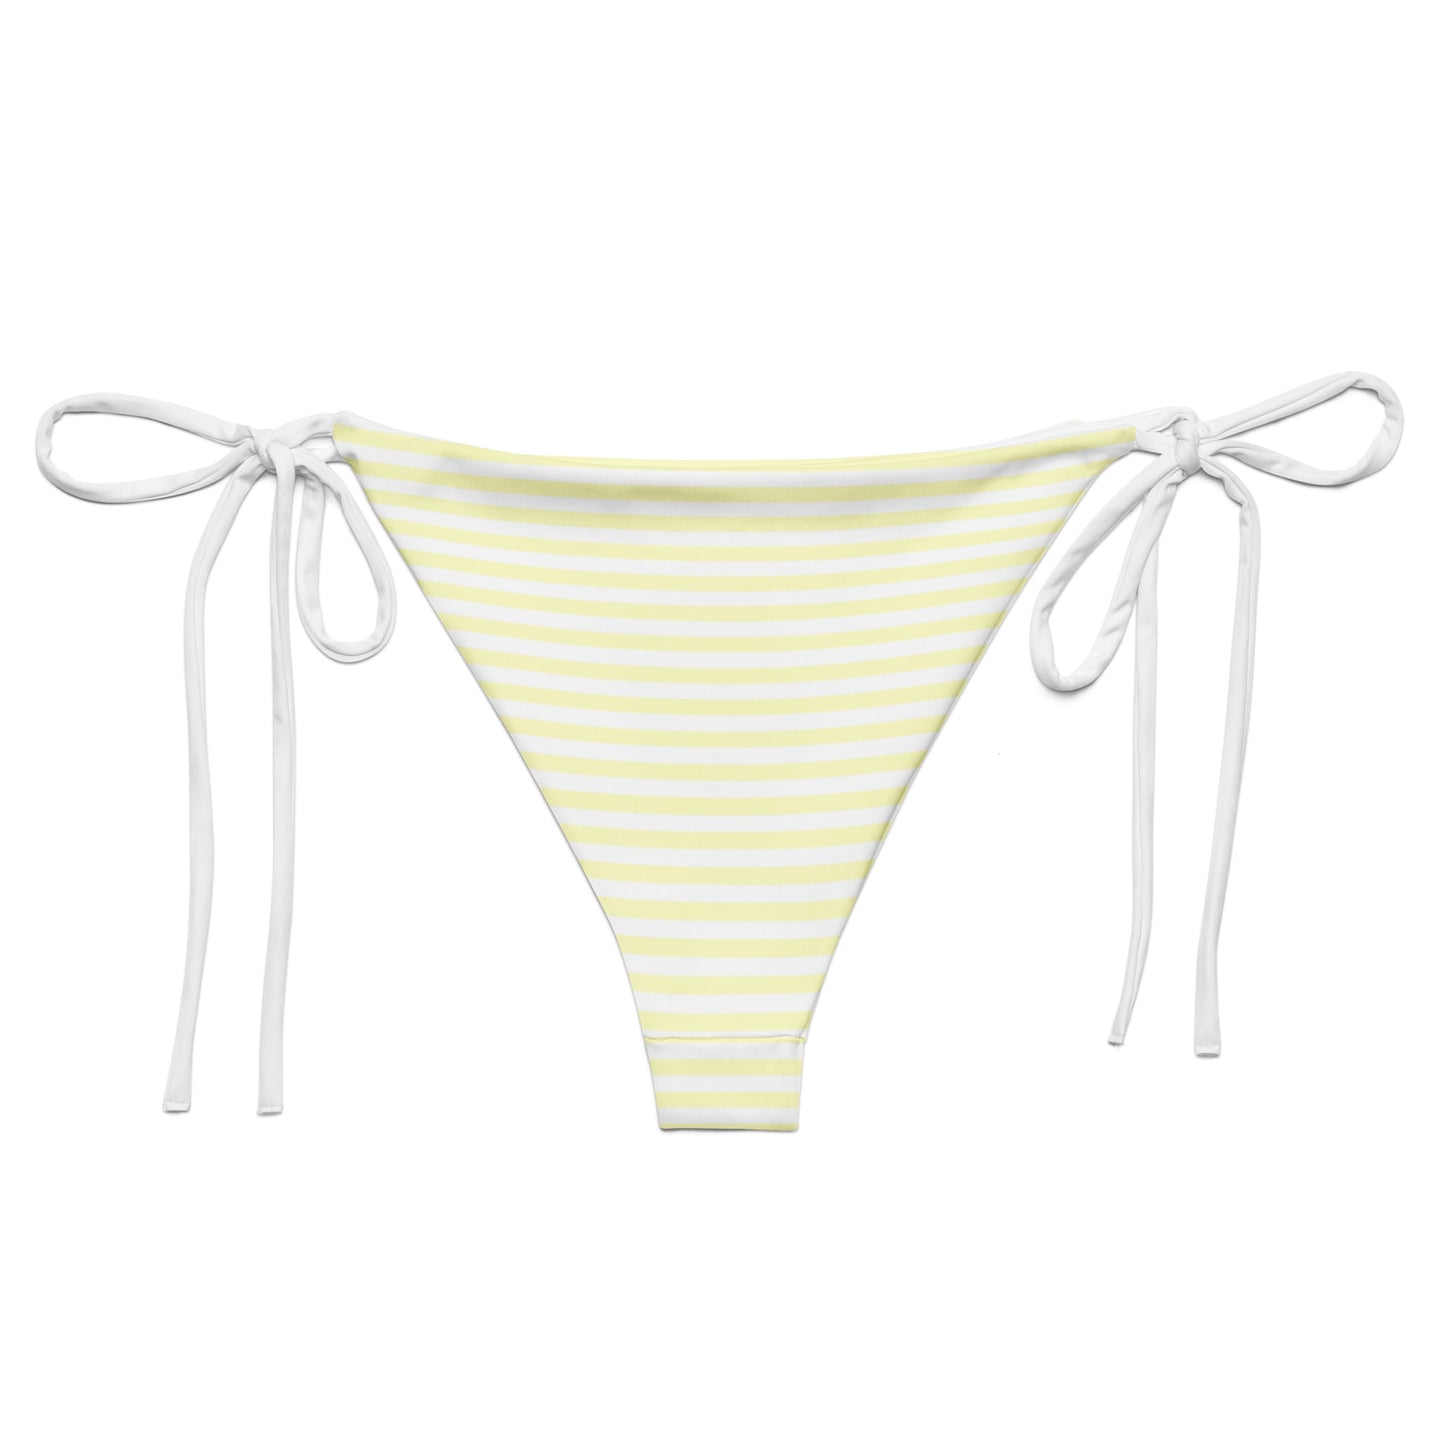 String Bikini Bottom | Pastel Lemon - Stripes by aisoi Swimwear & Beachwear